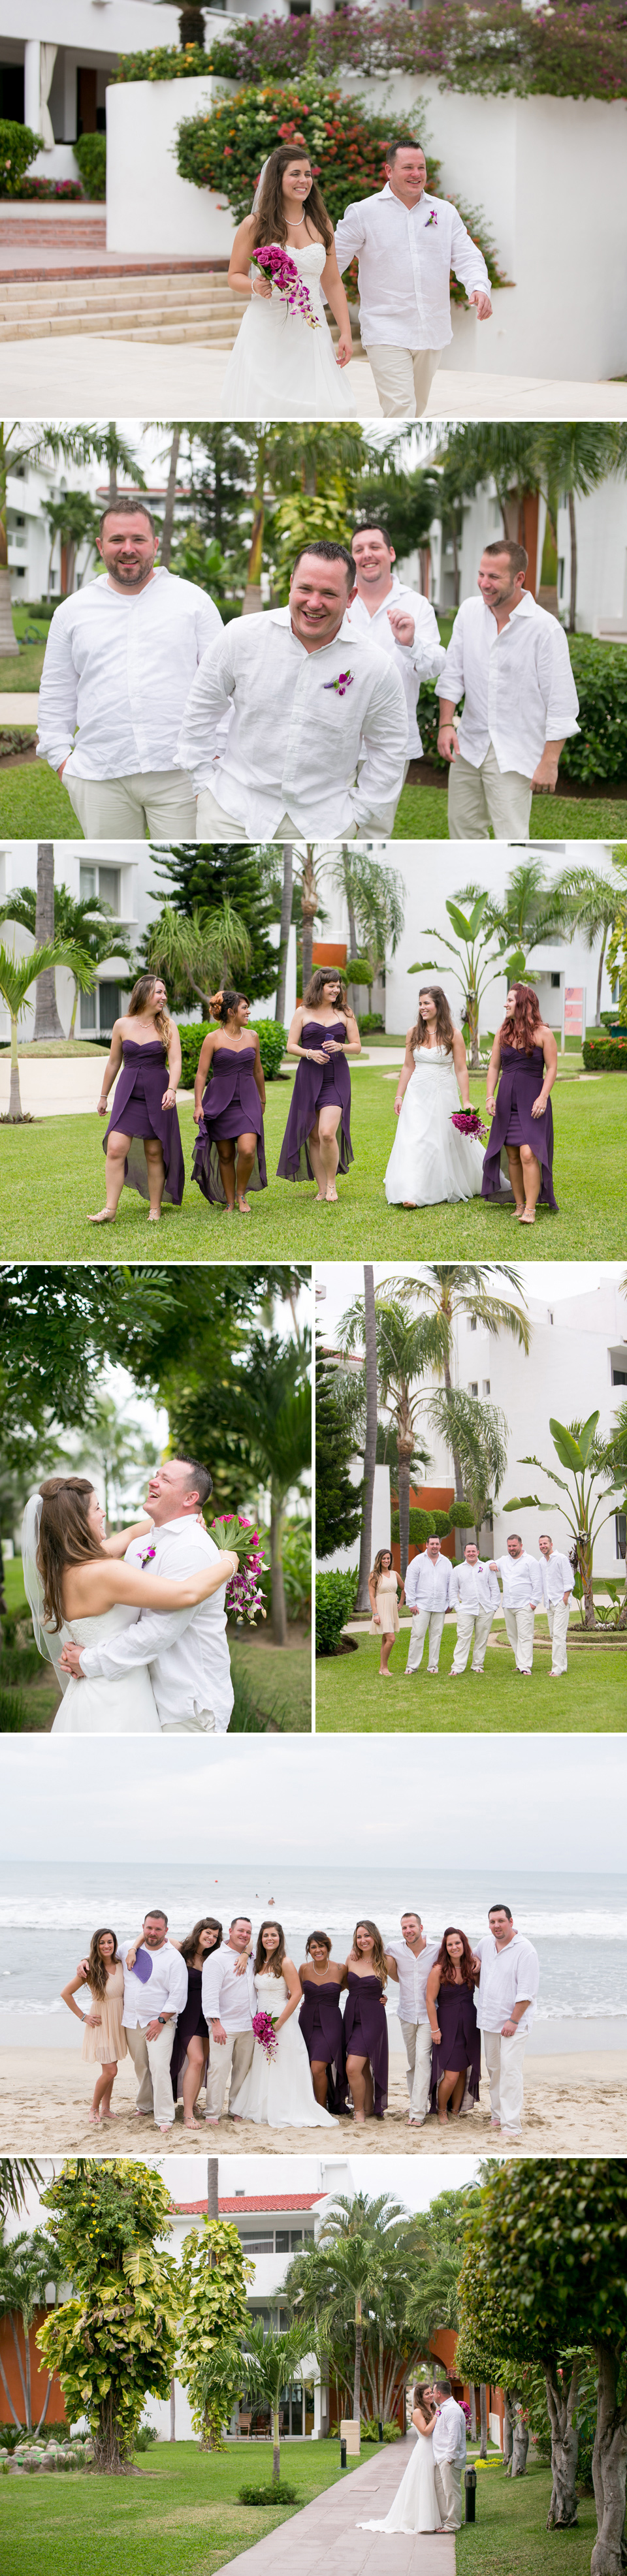 Puerto Vallarta Mexico wedding, Destination wedding photographer, Jana Marie Photography, travel photographer